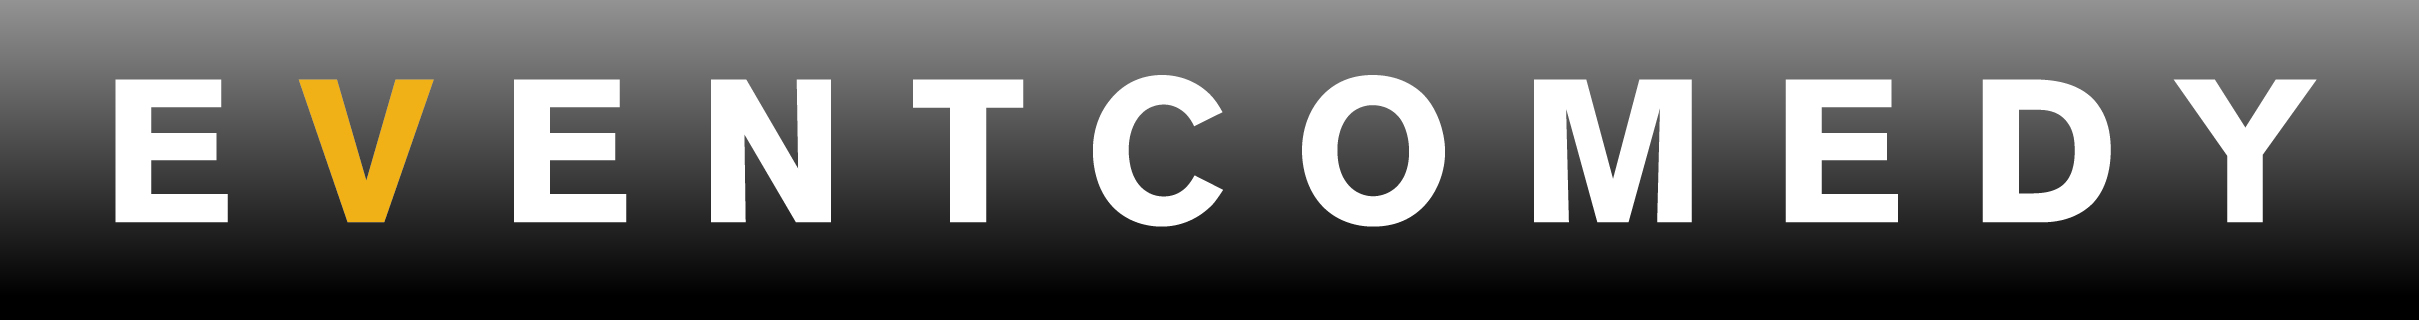 eventcomedy-walkact-logo.jpg